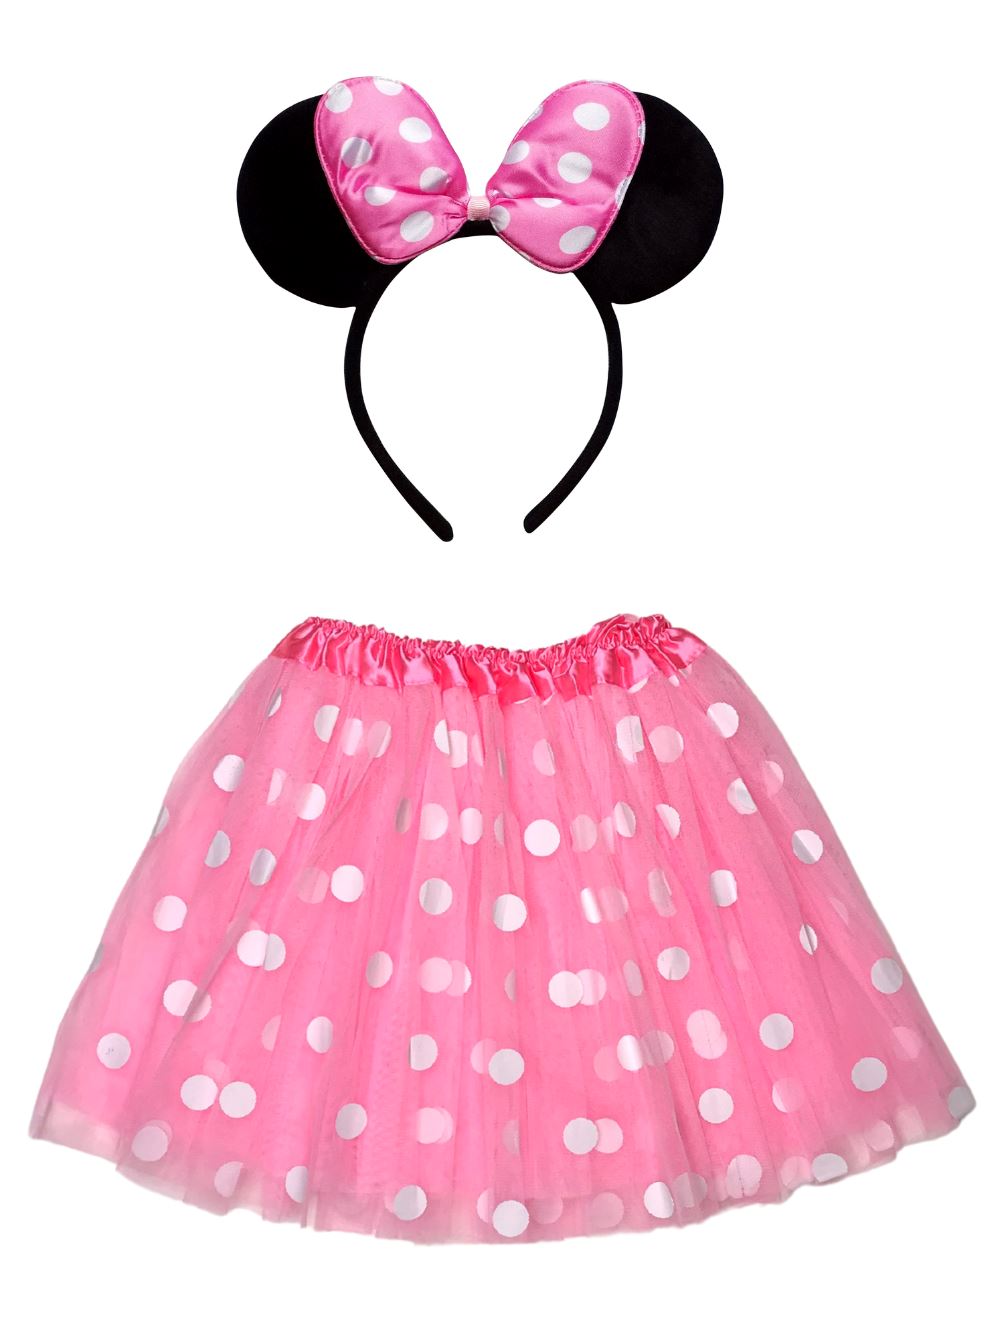 Minnie Mouse Tutu Skirt Set Adult or Size